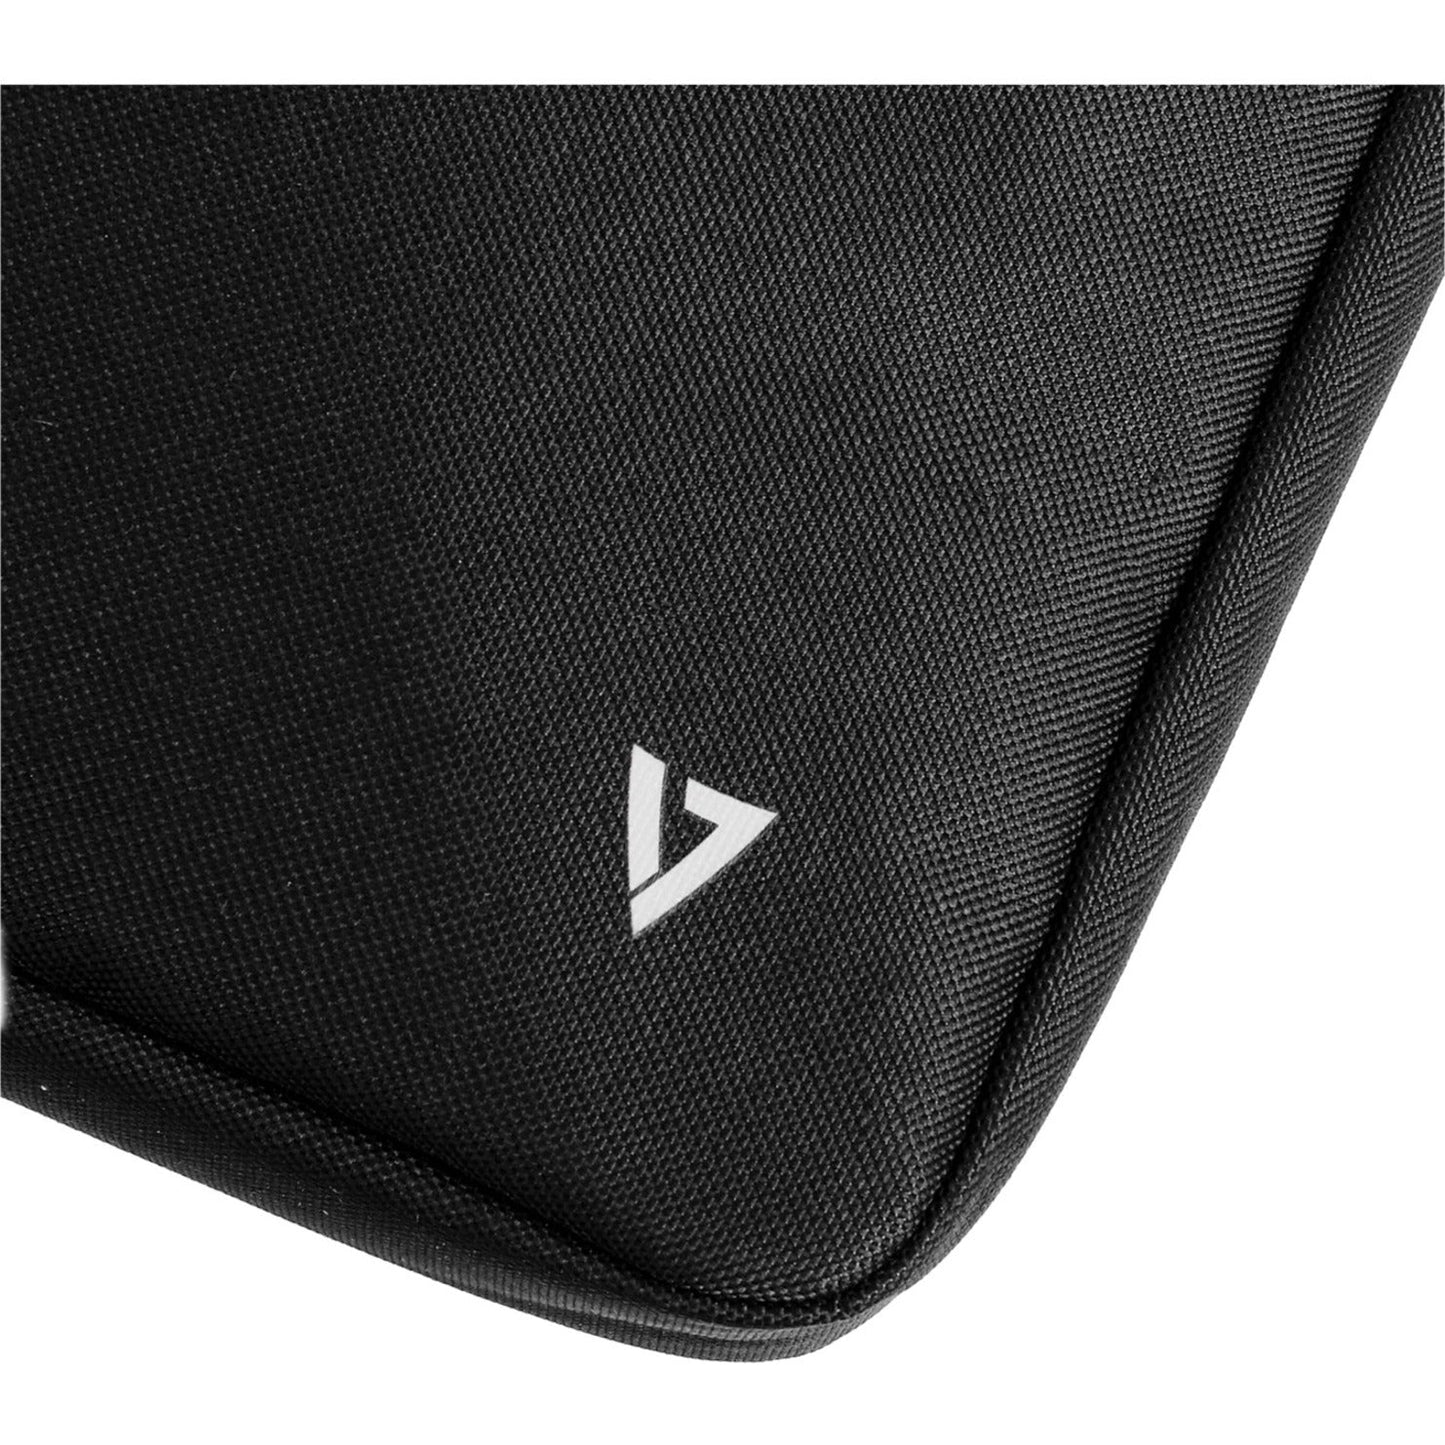 V7 Essential CTK14-BLK Carrying Case (Briefcase) for 14.1" Notebook - Black